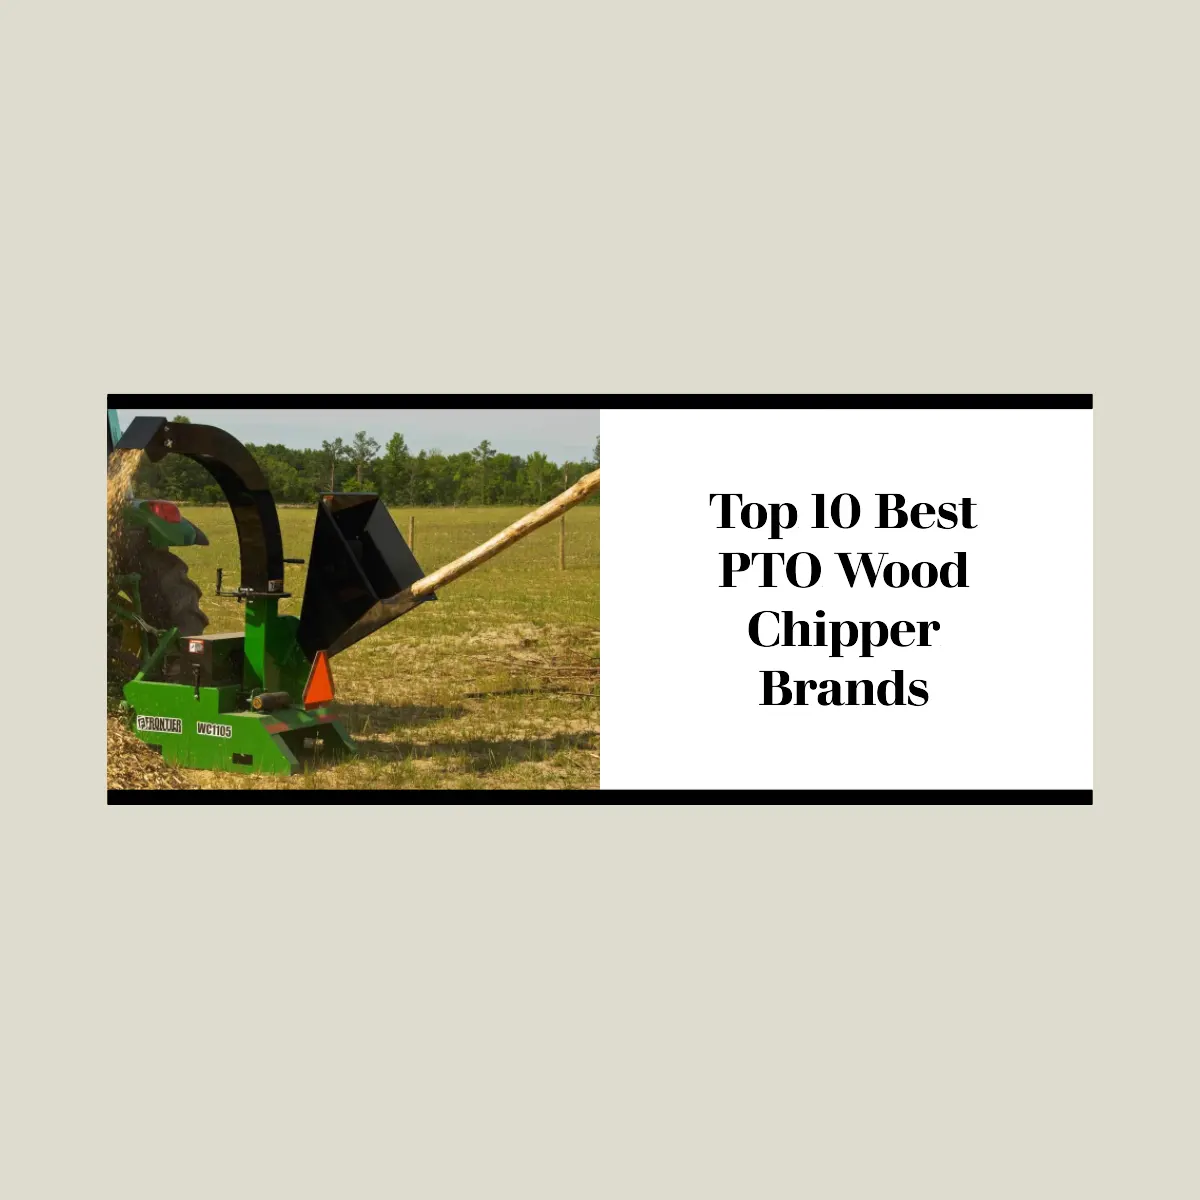 Top 10 Best PTO Wood Chipper Brands